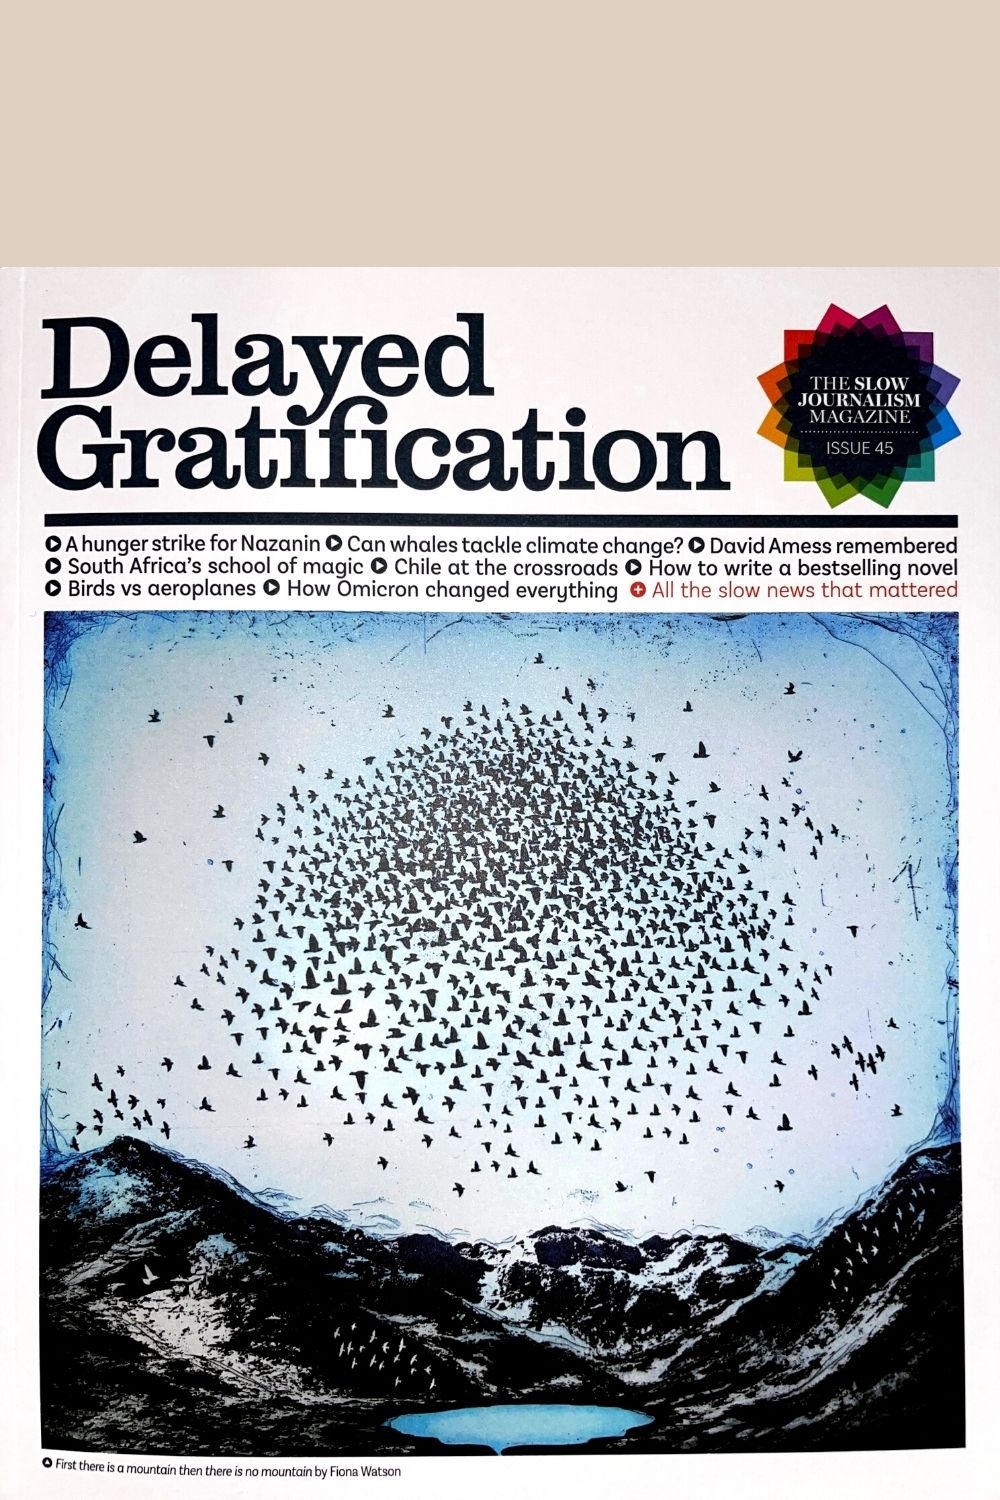 Delayed Gratification #45 Slow news magazine